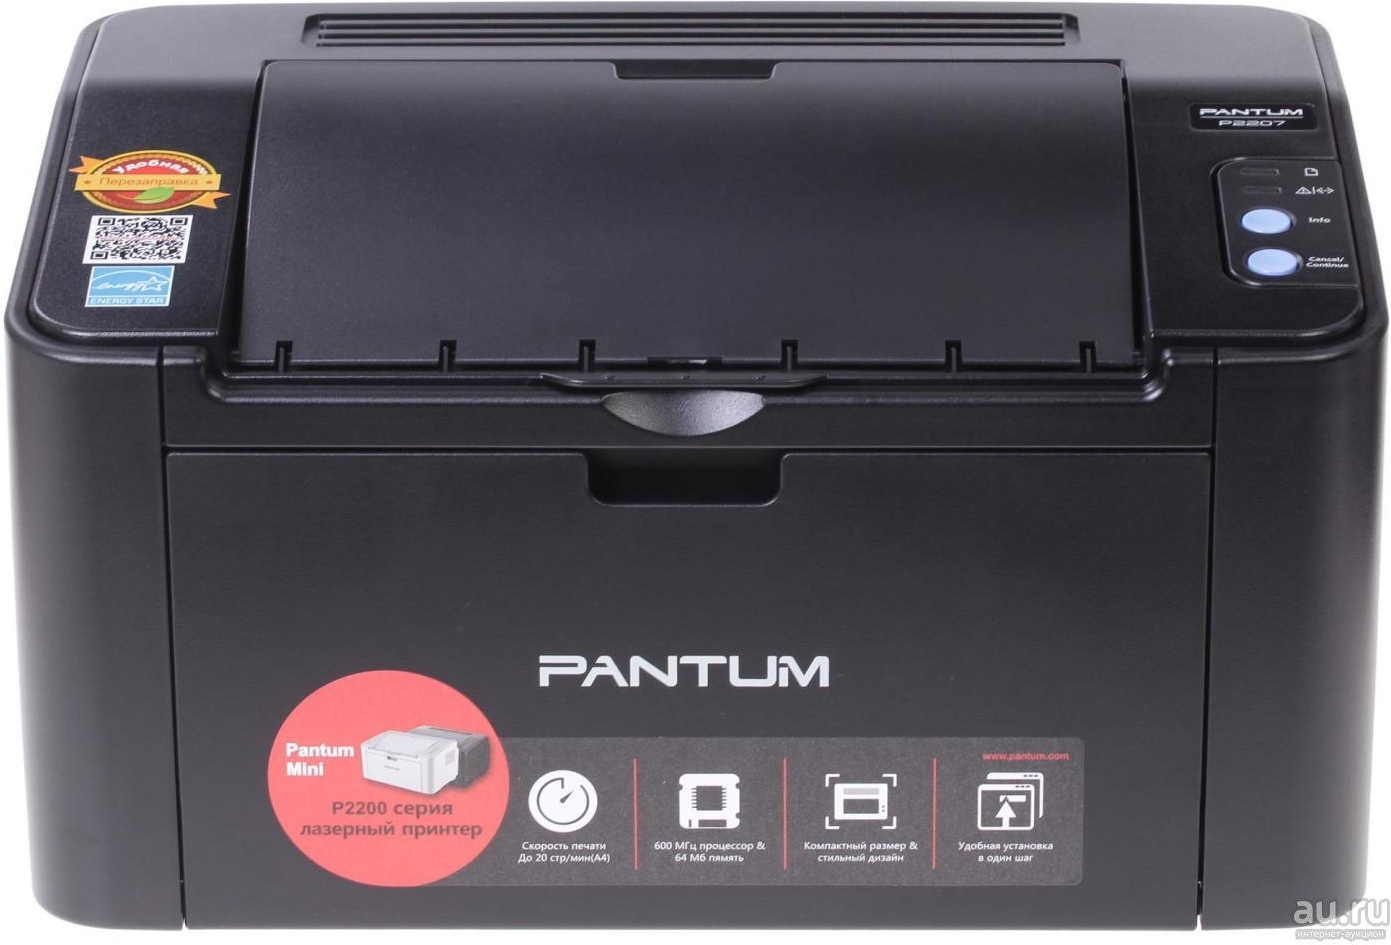 Принтер pantum p2200 series. Принтер лазерный Pantum p2502. Принтер Pantum 2207. Принтер Pantum p2500. Принтер лазерный Pantum p2207.